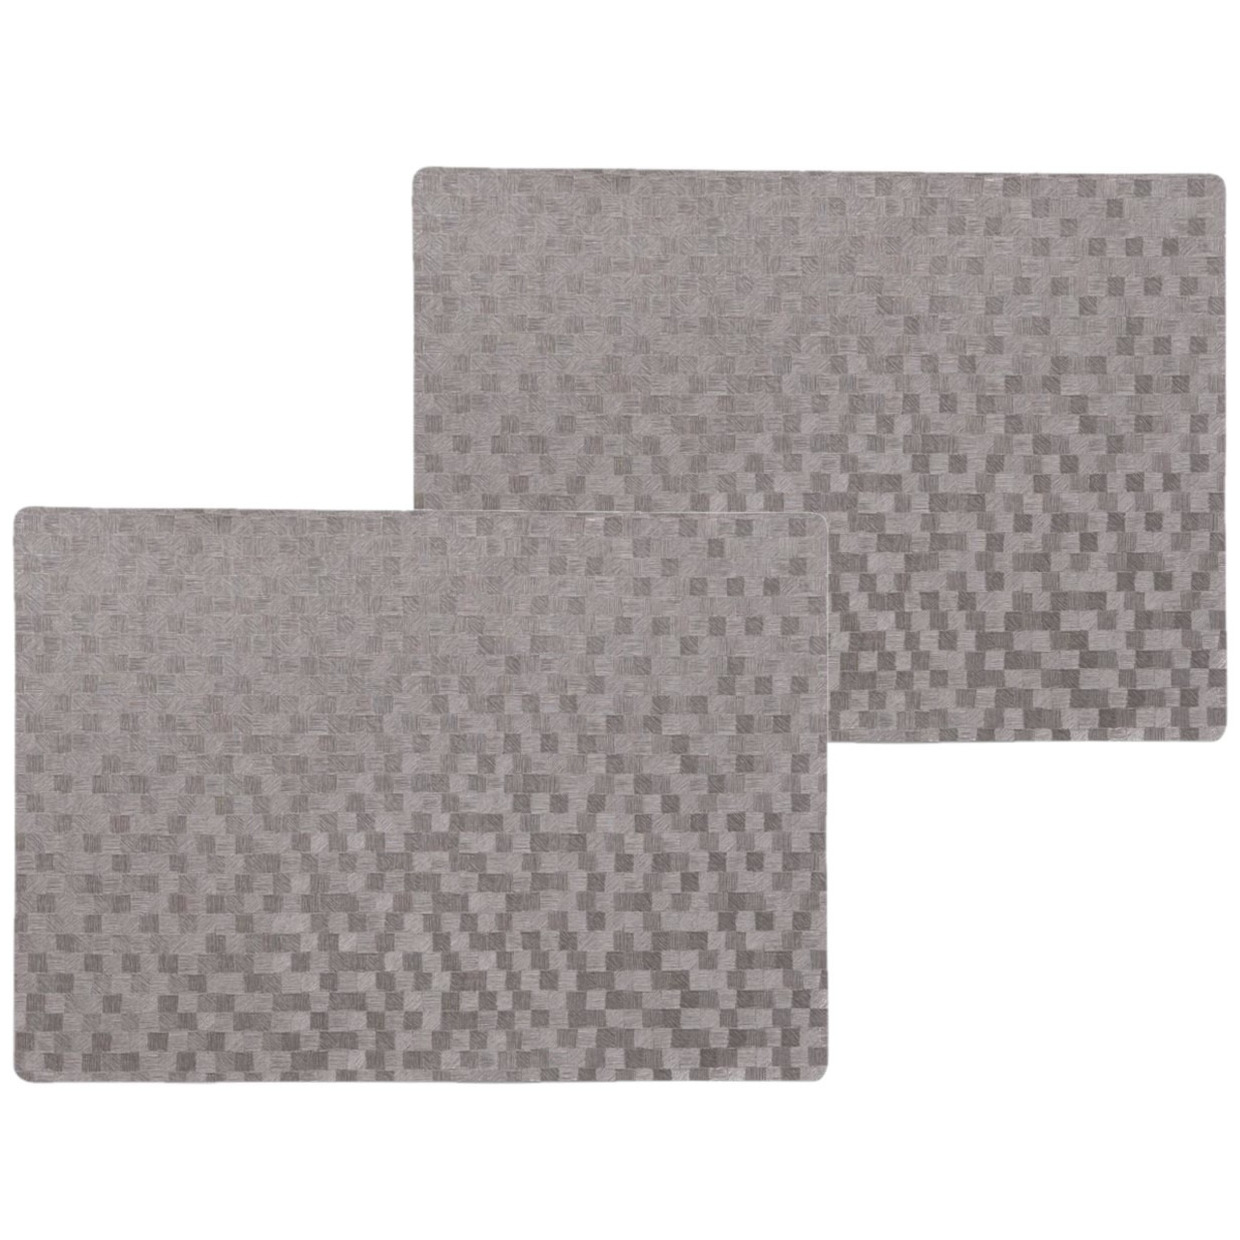 Wicotex 12x stuks stevige luxe Tafel placemats Stones grijs 30 x 43 cm -